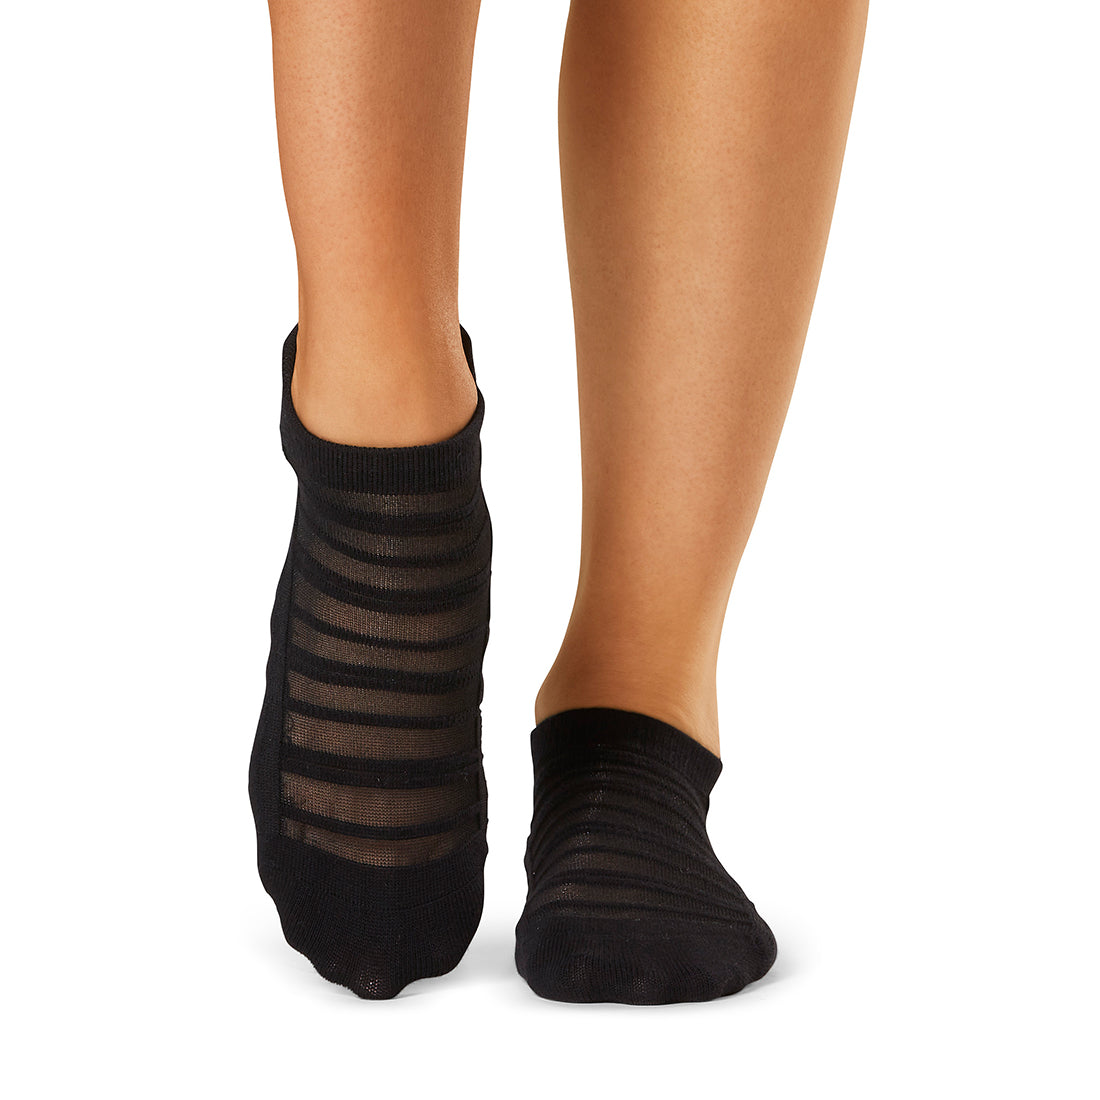 Tavi Savvy Breeze Grip Socks – The Shop at Equinox